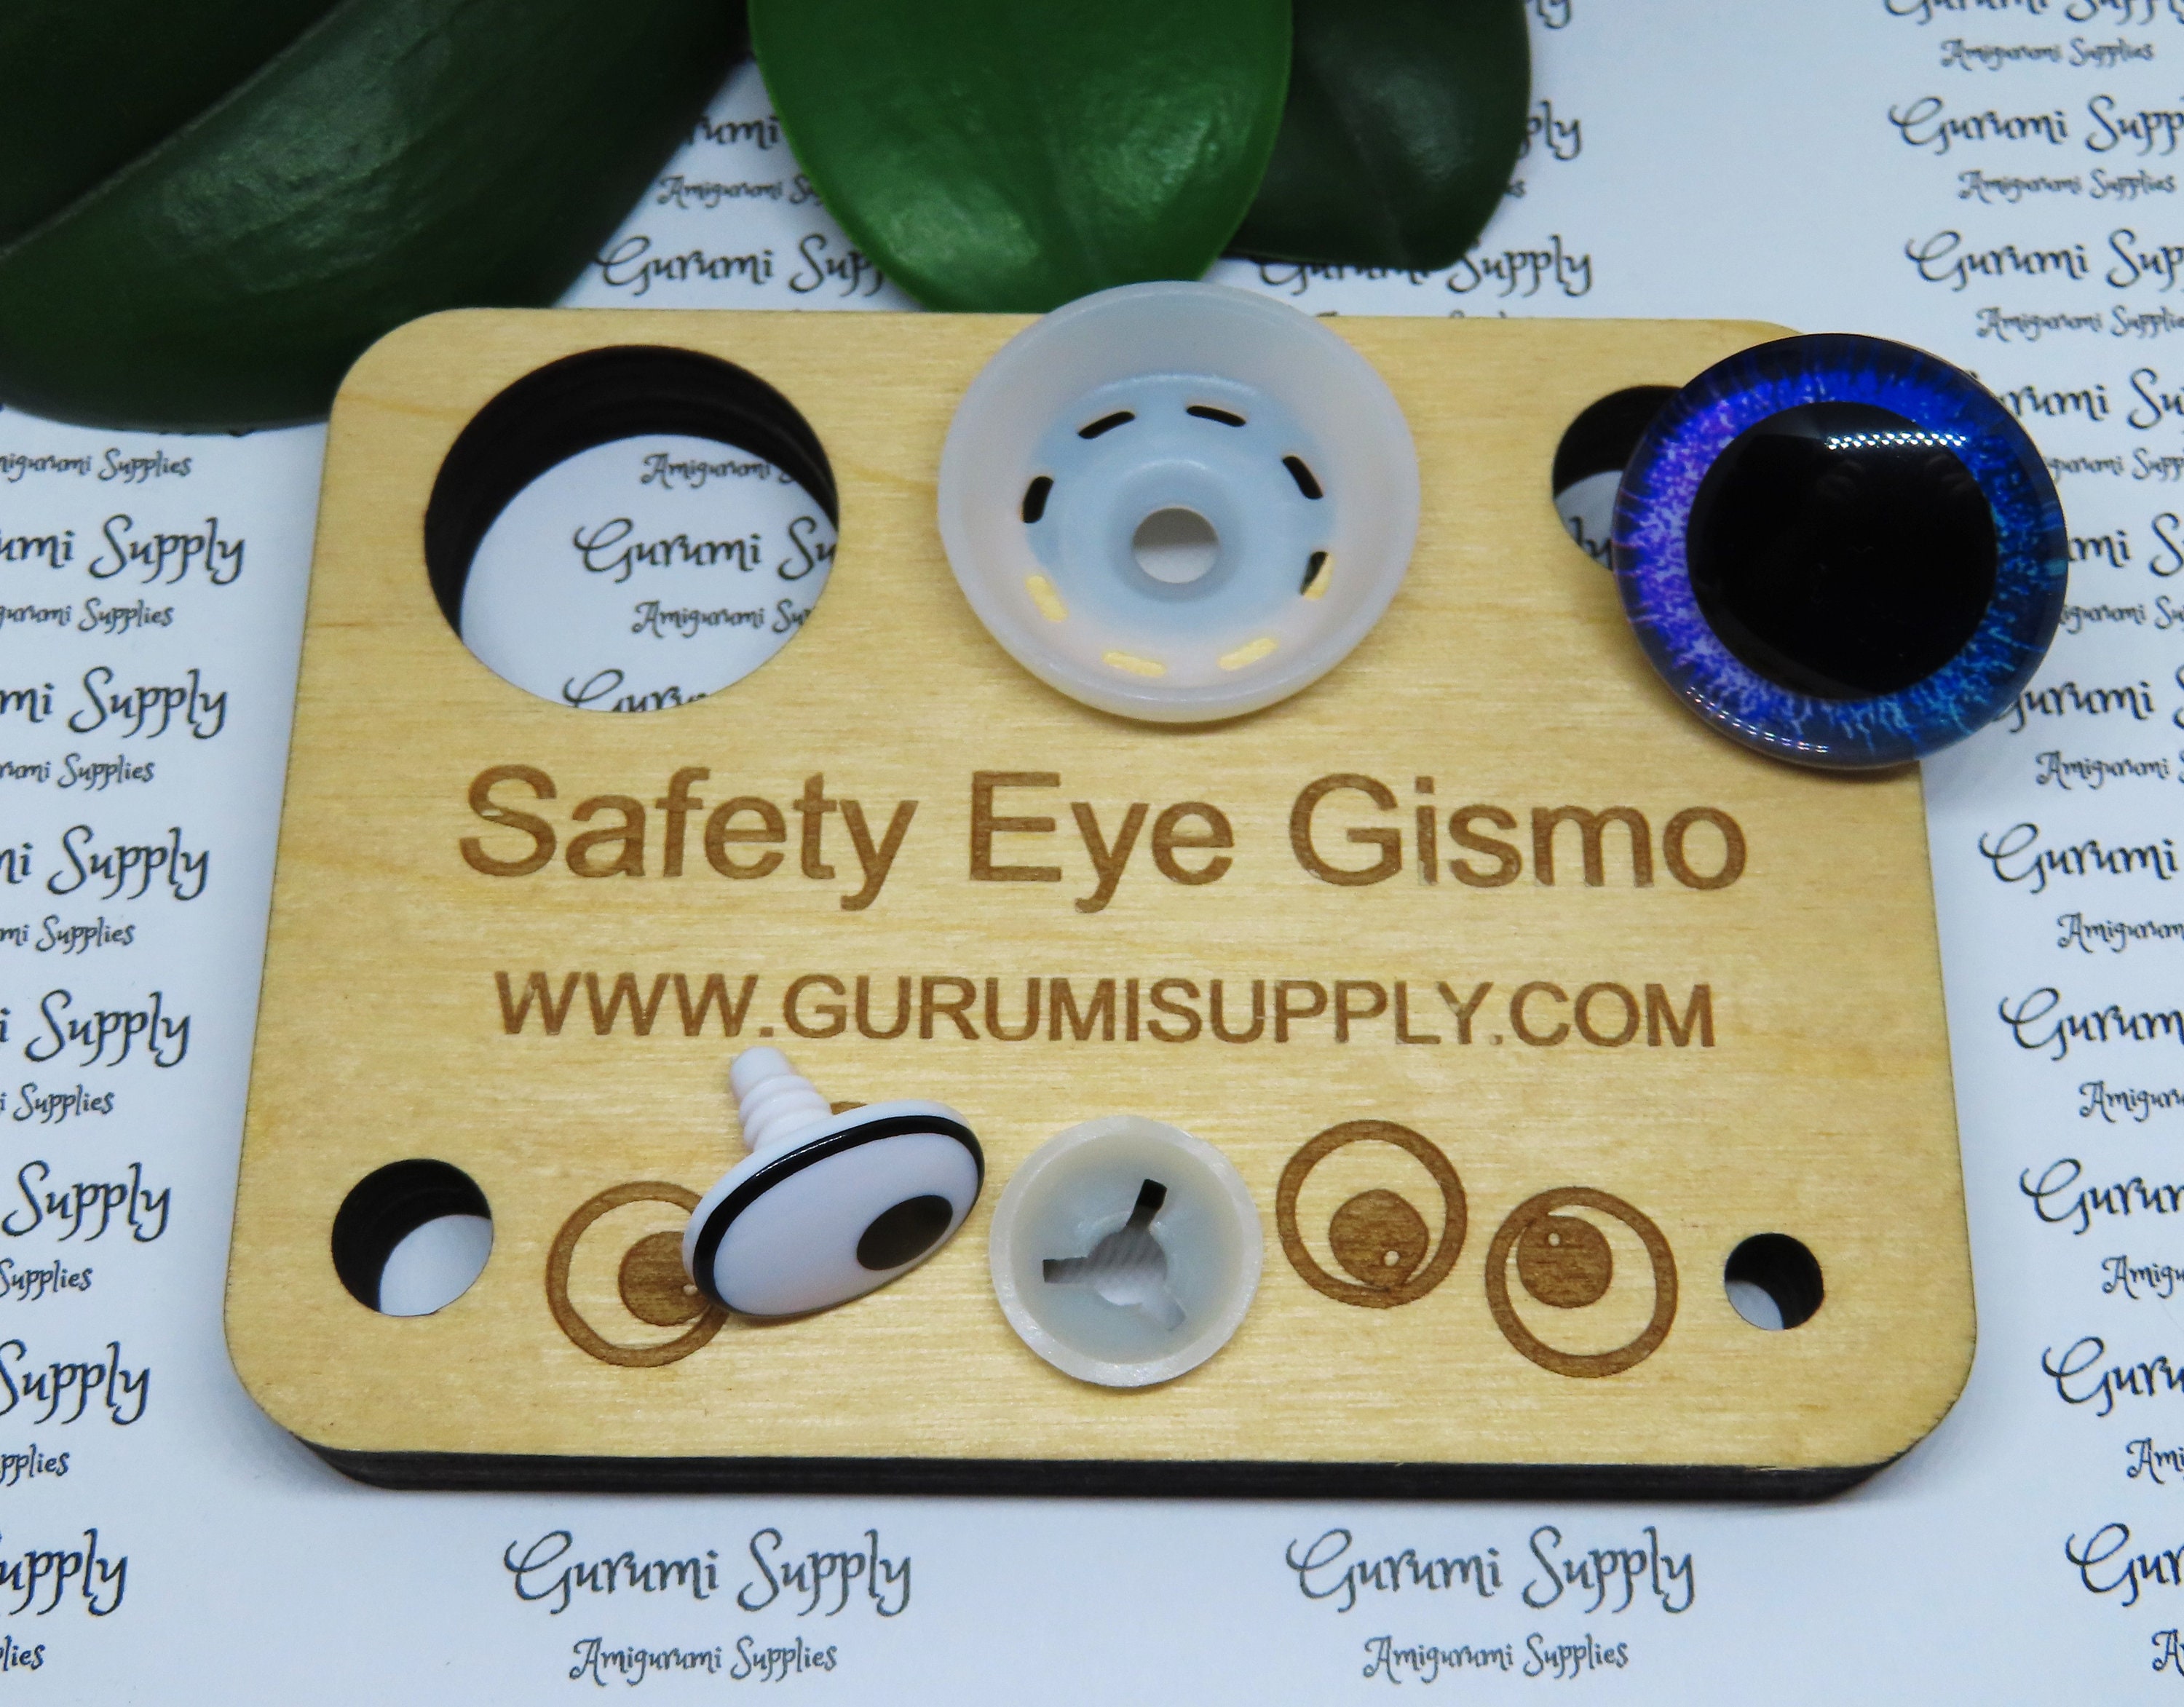 Safety Eye Gismo Purple Grape with Glitter - Keychain - Safety Eye Tool -  Safety Eye Jig - Safety Eye Helper - Amigurumi - Travel Size